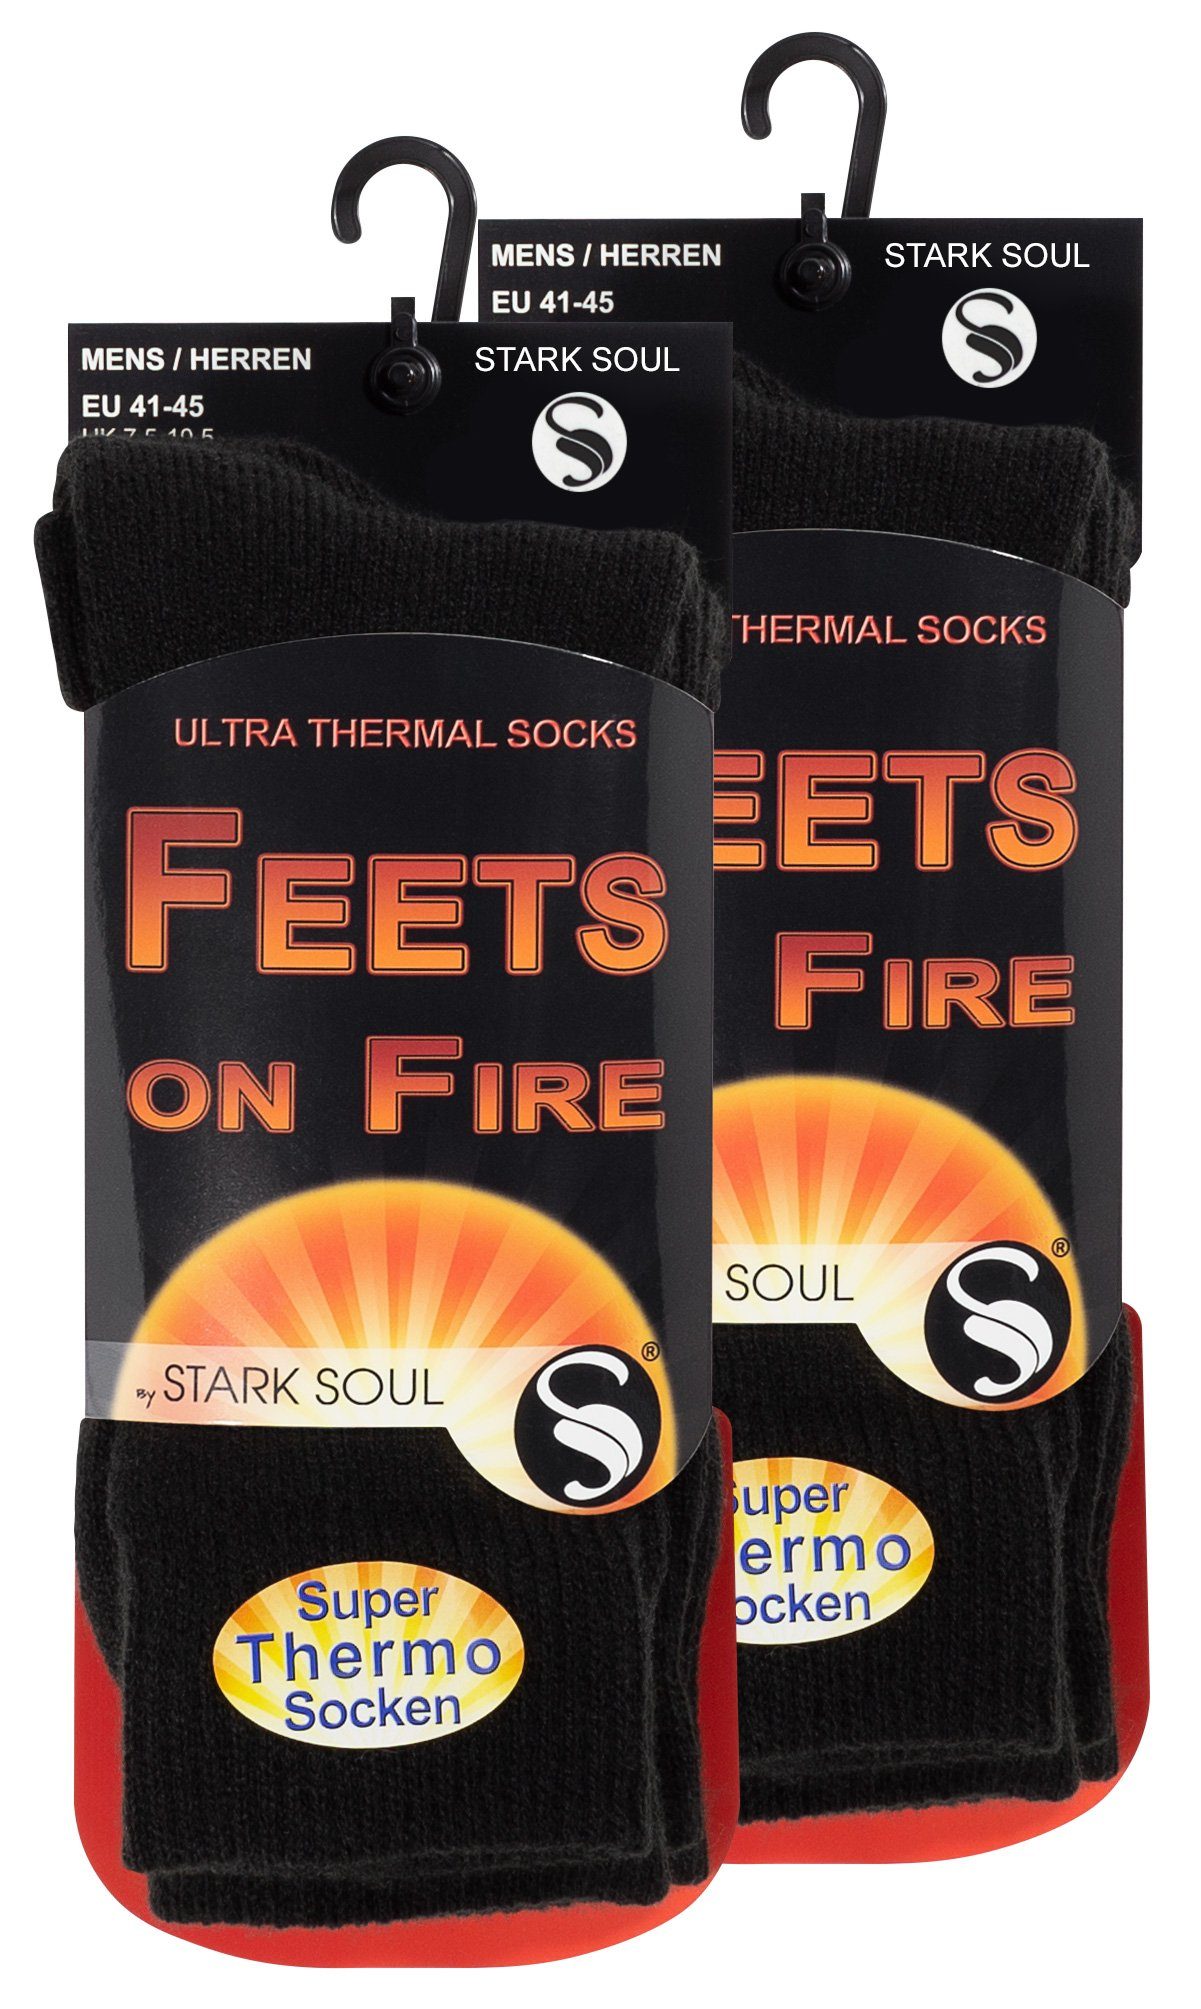 Stark Soul® Thermosocken FEETS on FIRE - 2 Paar Herren Ultra Thermo Носки, warme Winter Носки, Grösse EU 41-45 2er-Pack